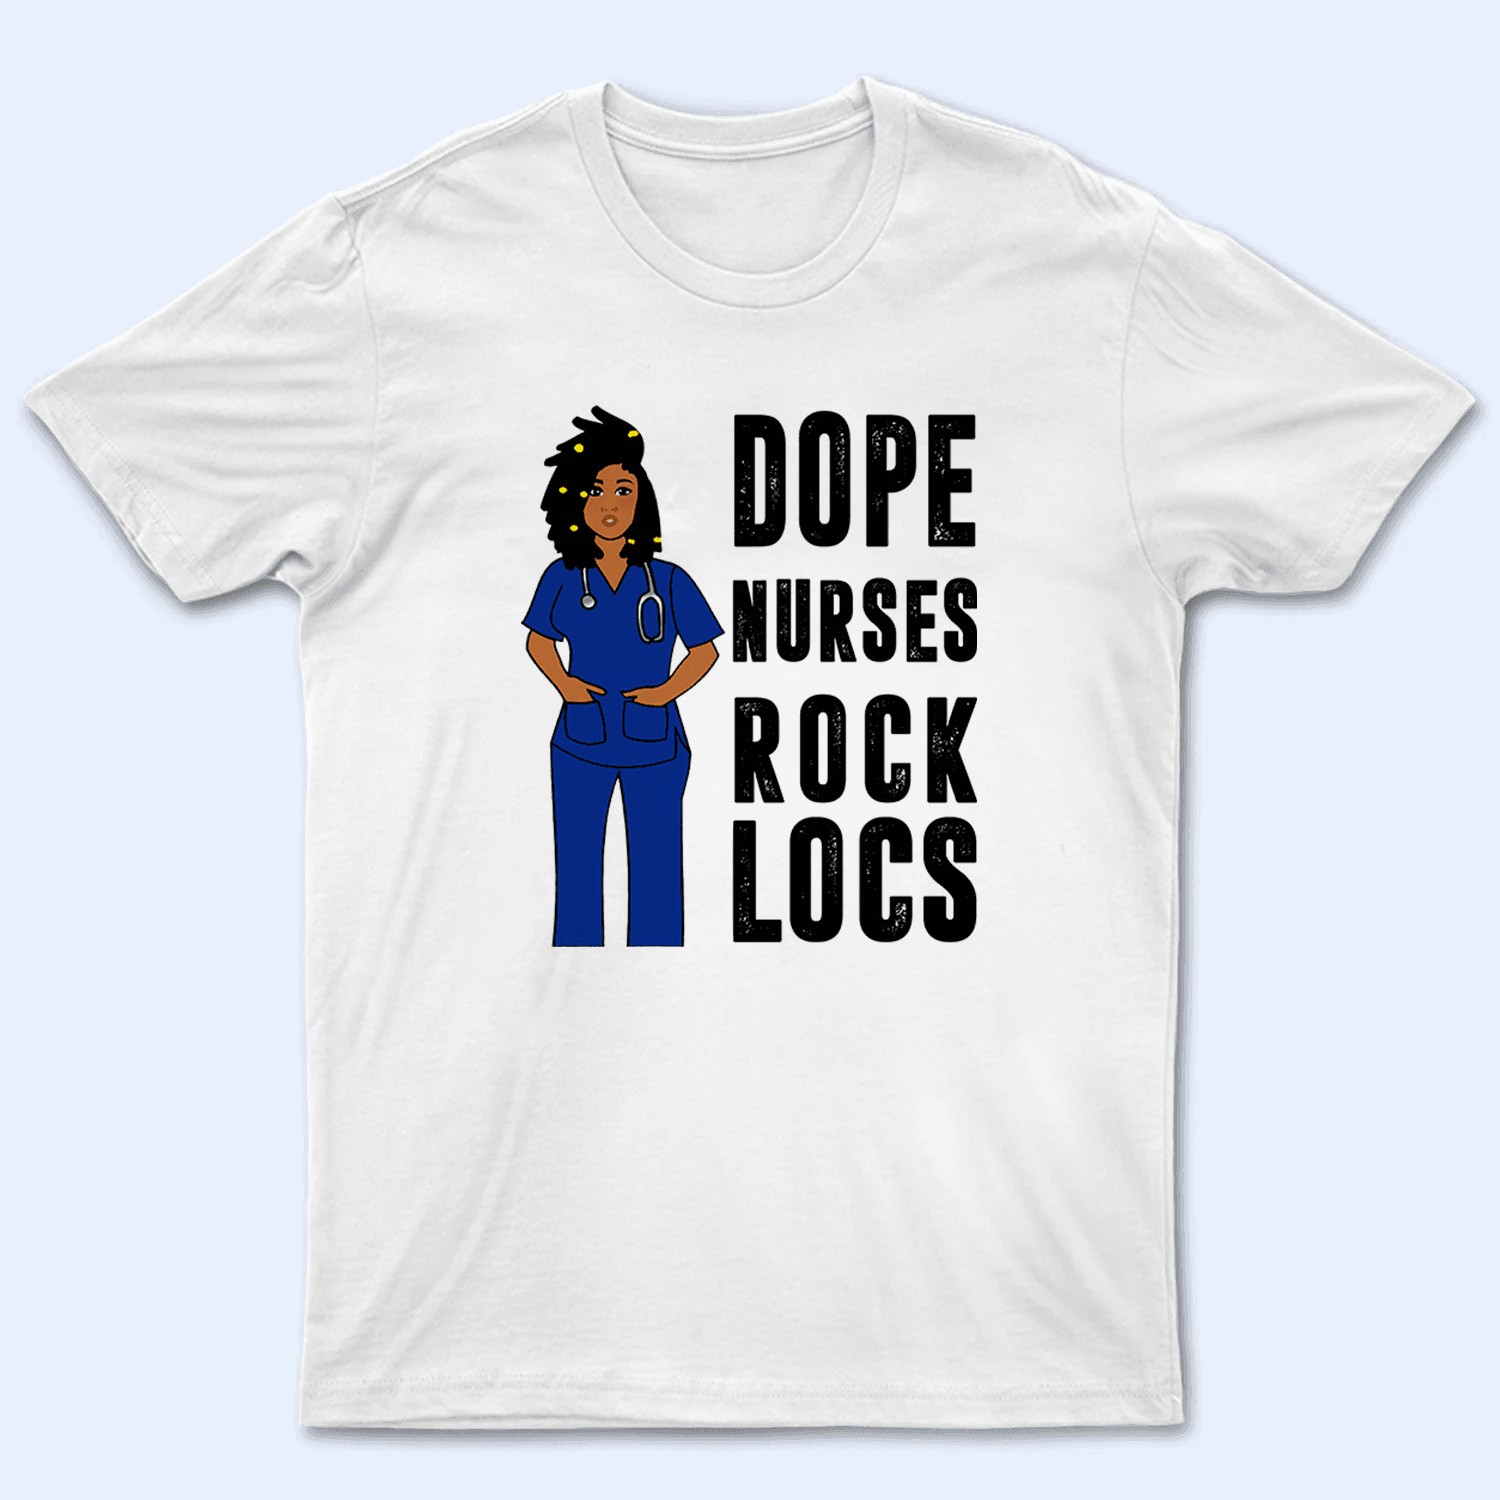 Dope Nurses Rock Locs - Personalized Custom T Shirt - Birthday, Loving, Funny Gift for Nurse, Black Nurse, CNA, Healthcare, Registered RN - Suzitee Store